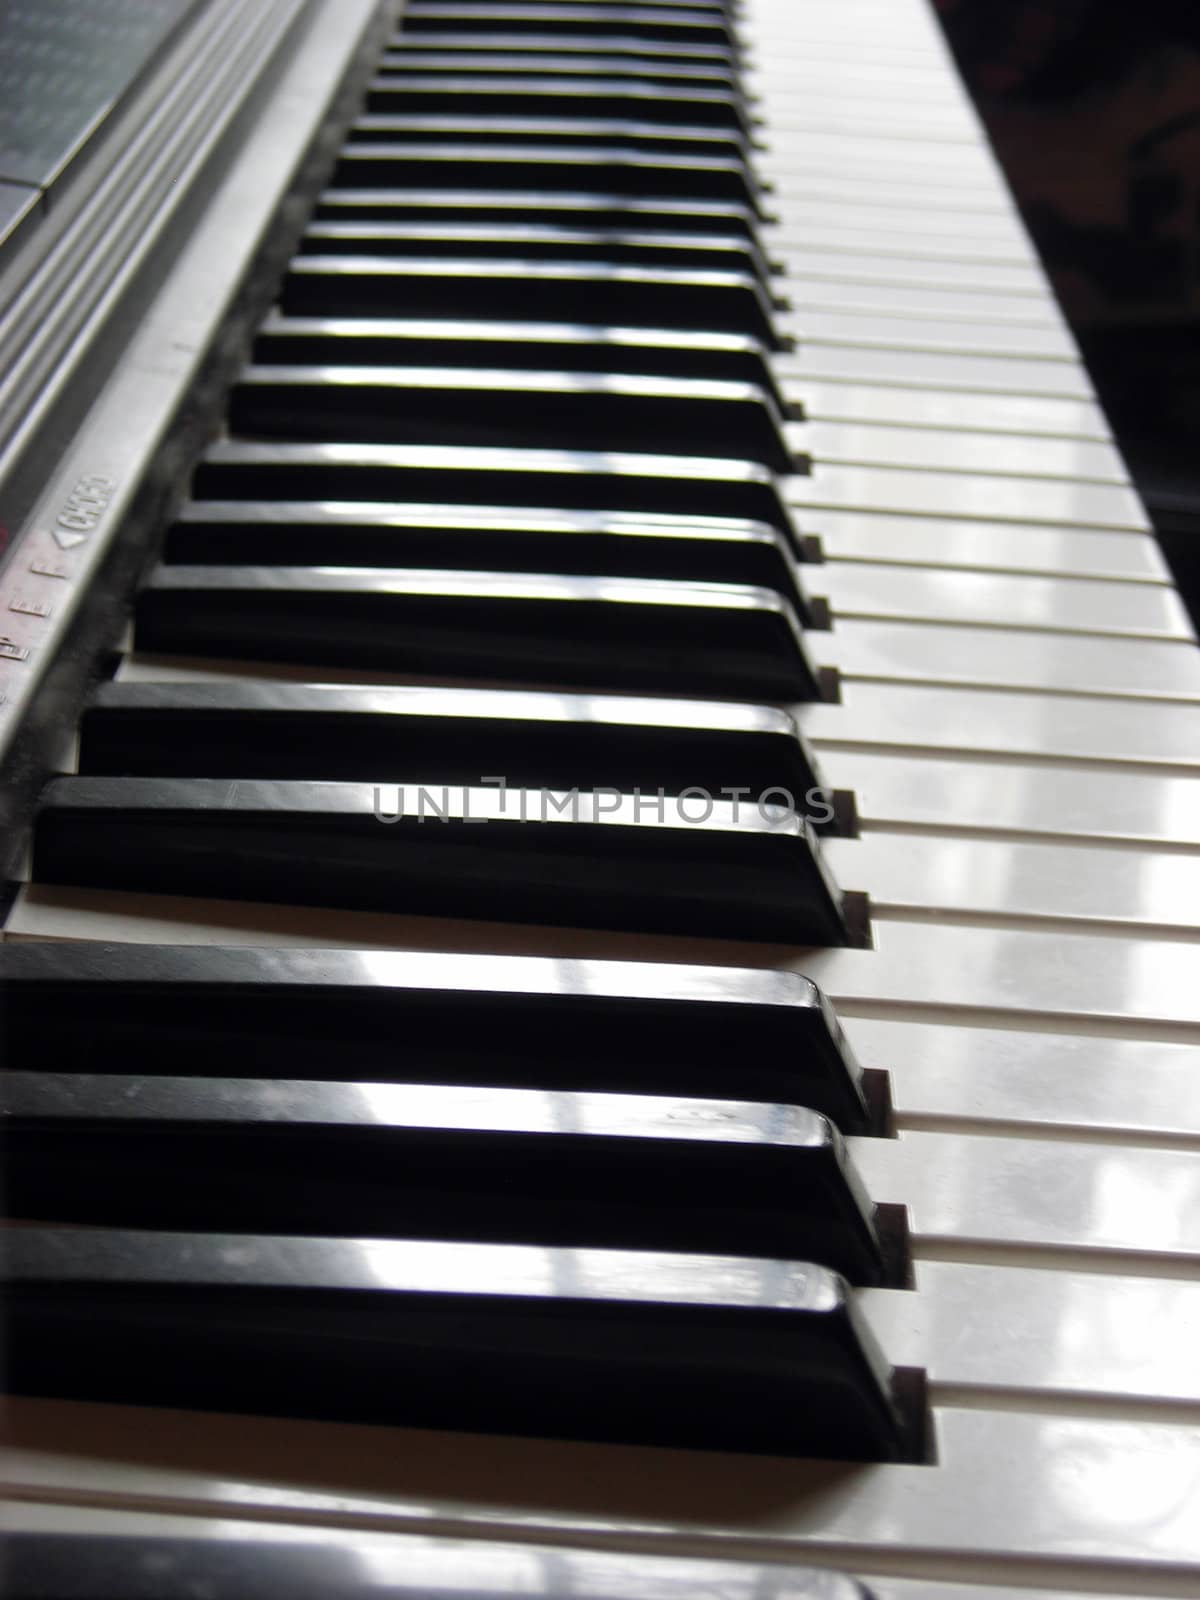 Black and white keys of an electronic organ keyboard at sun light.